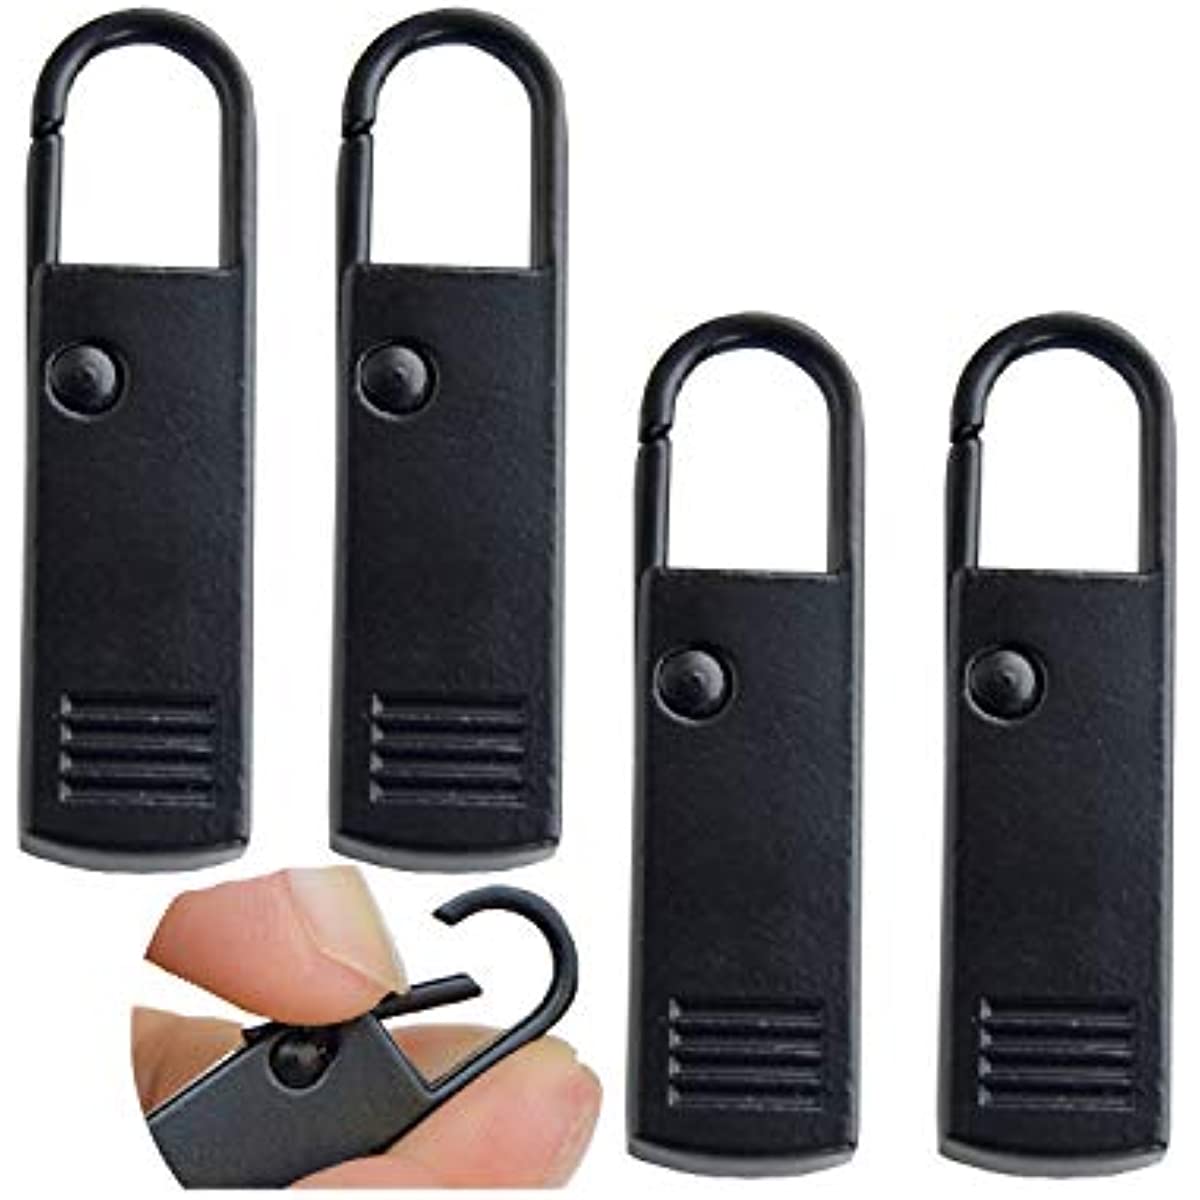 Zipper Pull Replacement,Metal Zipper Handle Mend Fixer Zipper Tab Repair  for Luggage Suitcase Bag,Backpack,Jacket Bags,Coat Boots (Black)